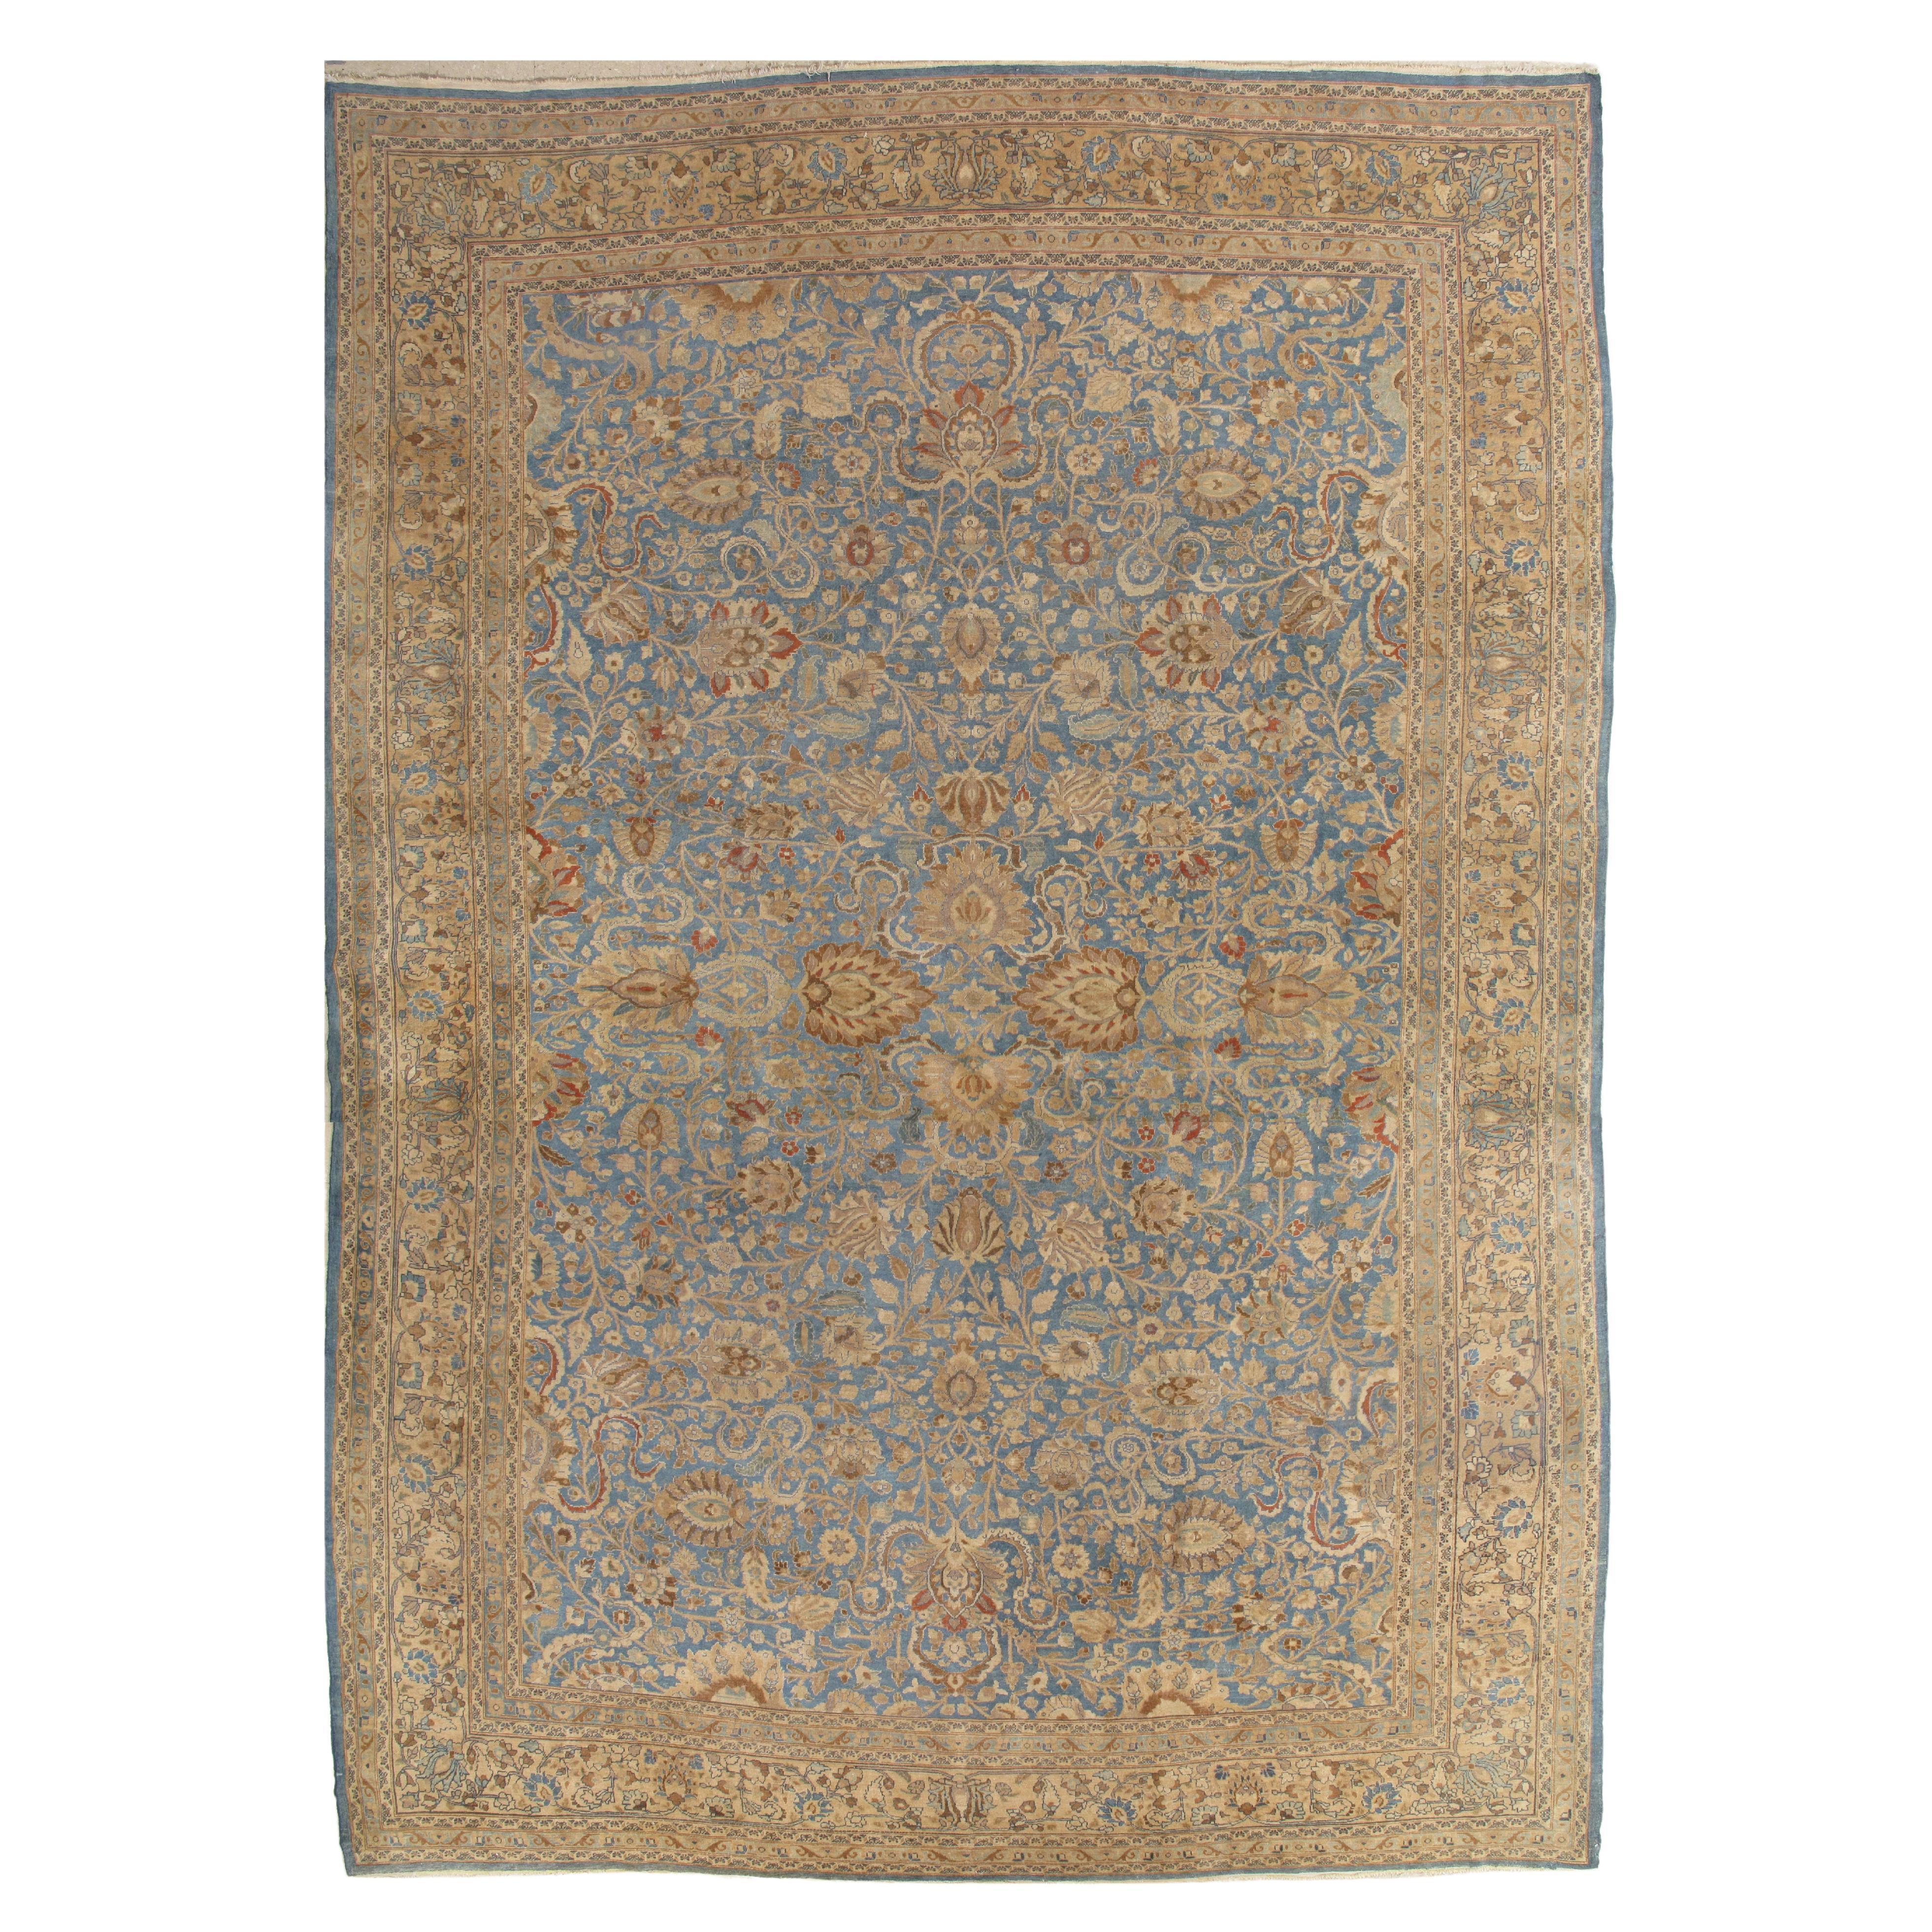 Antique Persian Mashad Carpet, Handmade Oriental Rug, Soft, Taupe, Lt Blue Beige